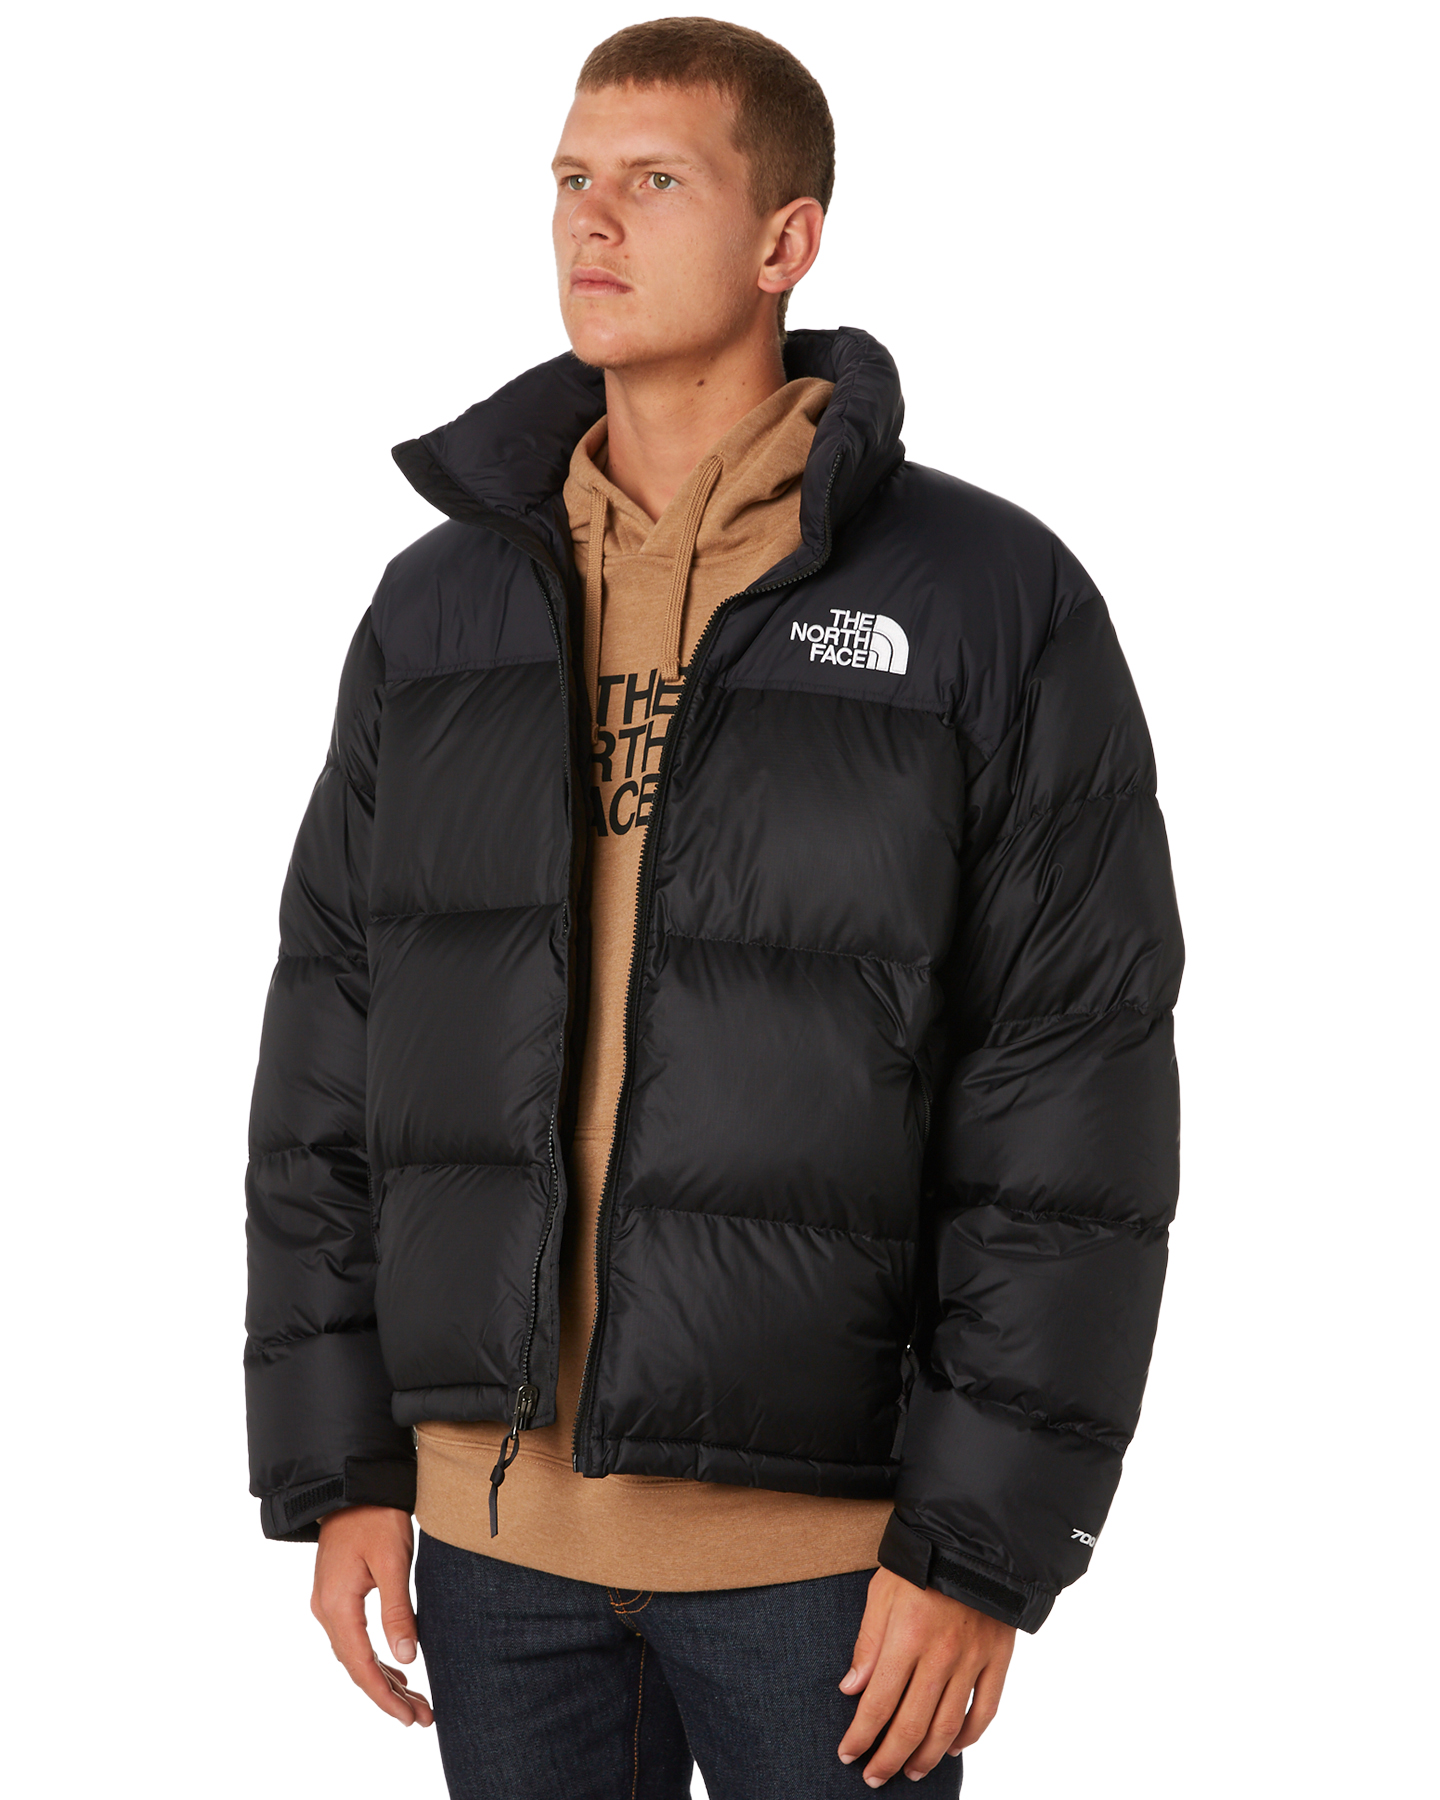 The north face mens 1996 retro nuptse jacket sale – Cheap trendy online